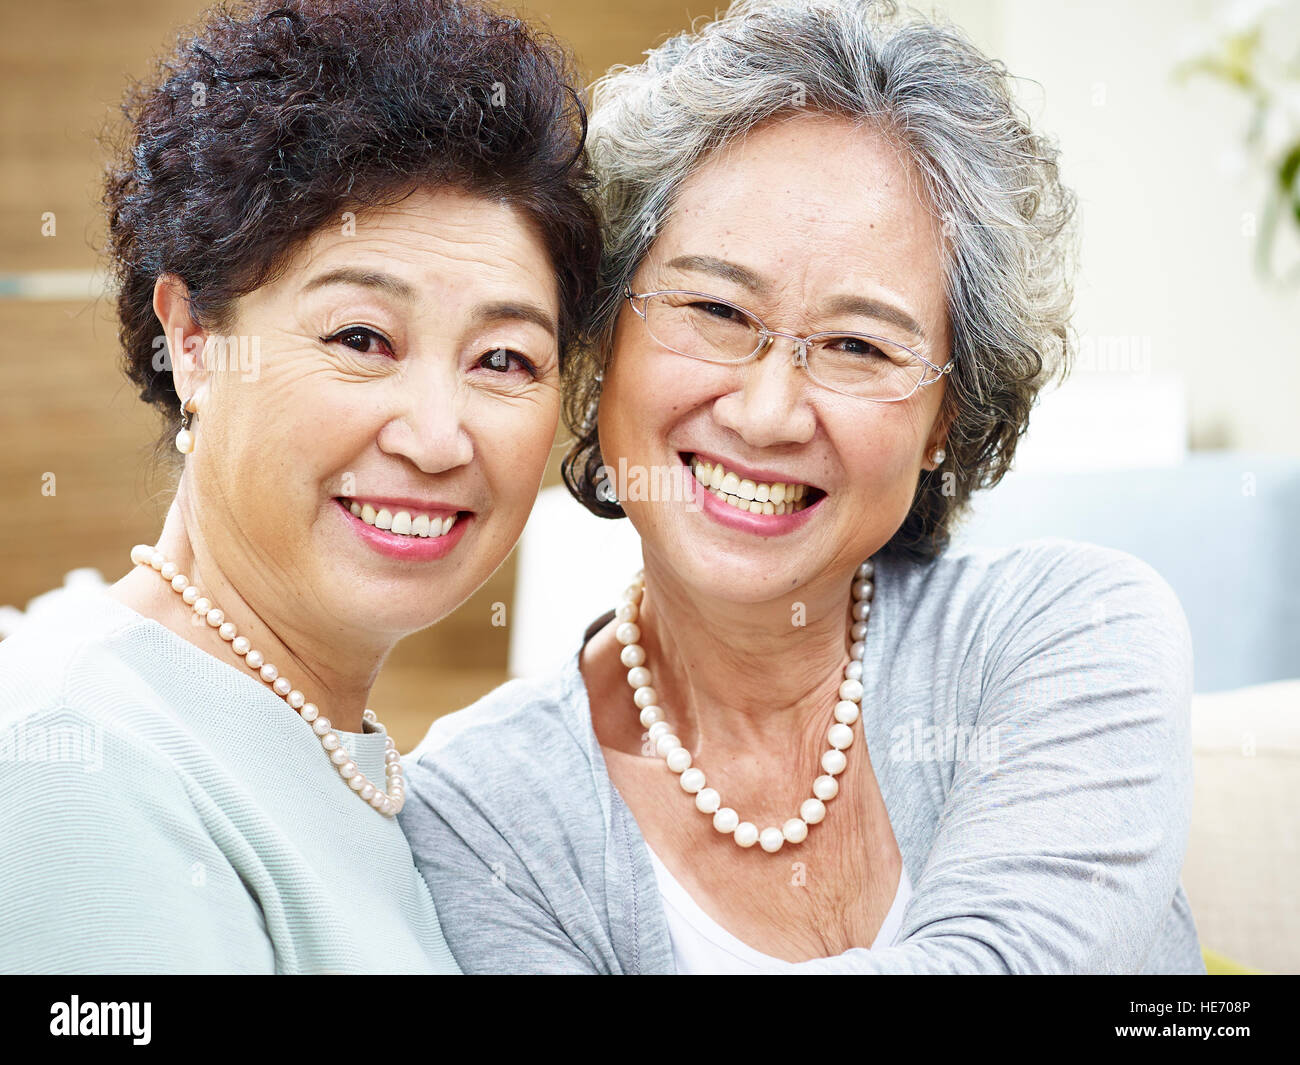 Close-up portrait of a happy senior couple smiling at camera. Banque D'Images